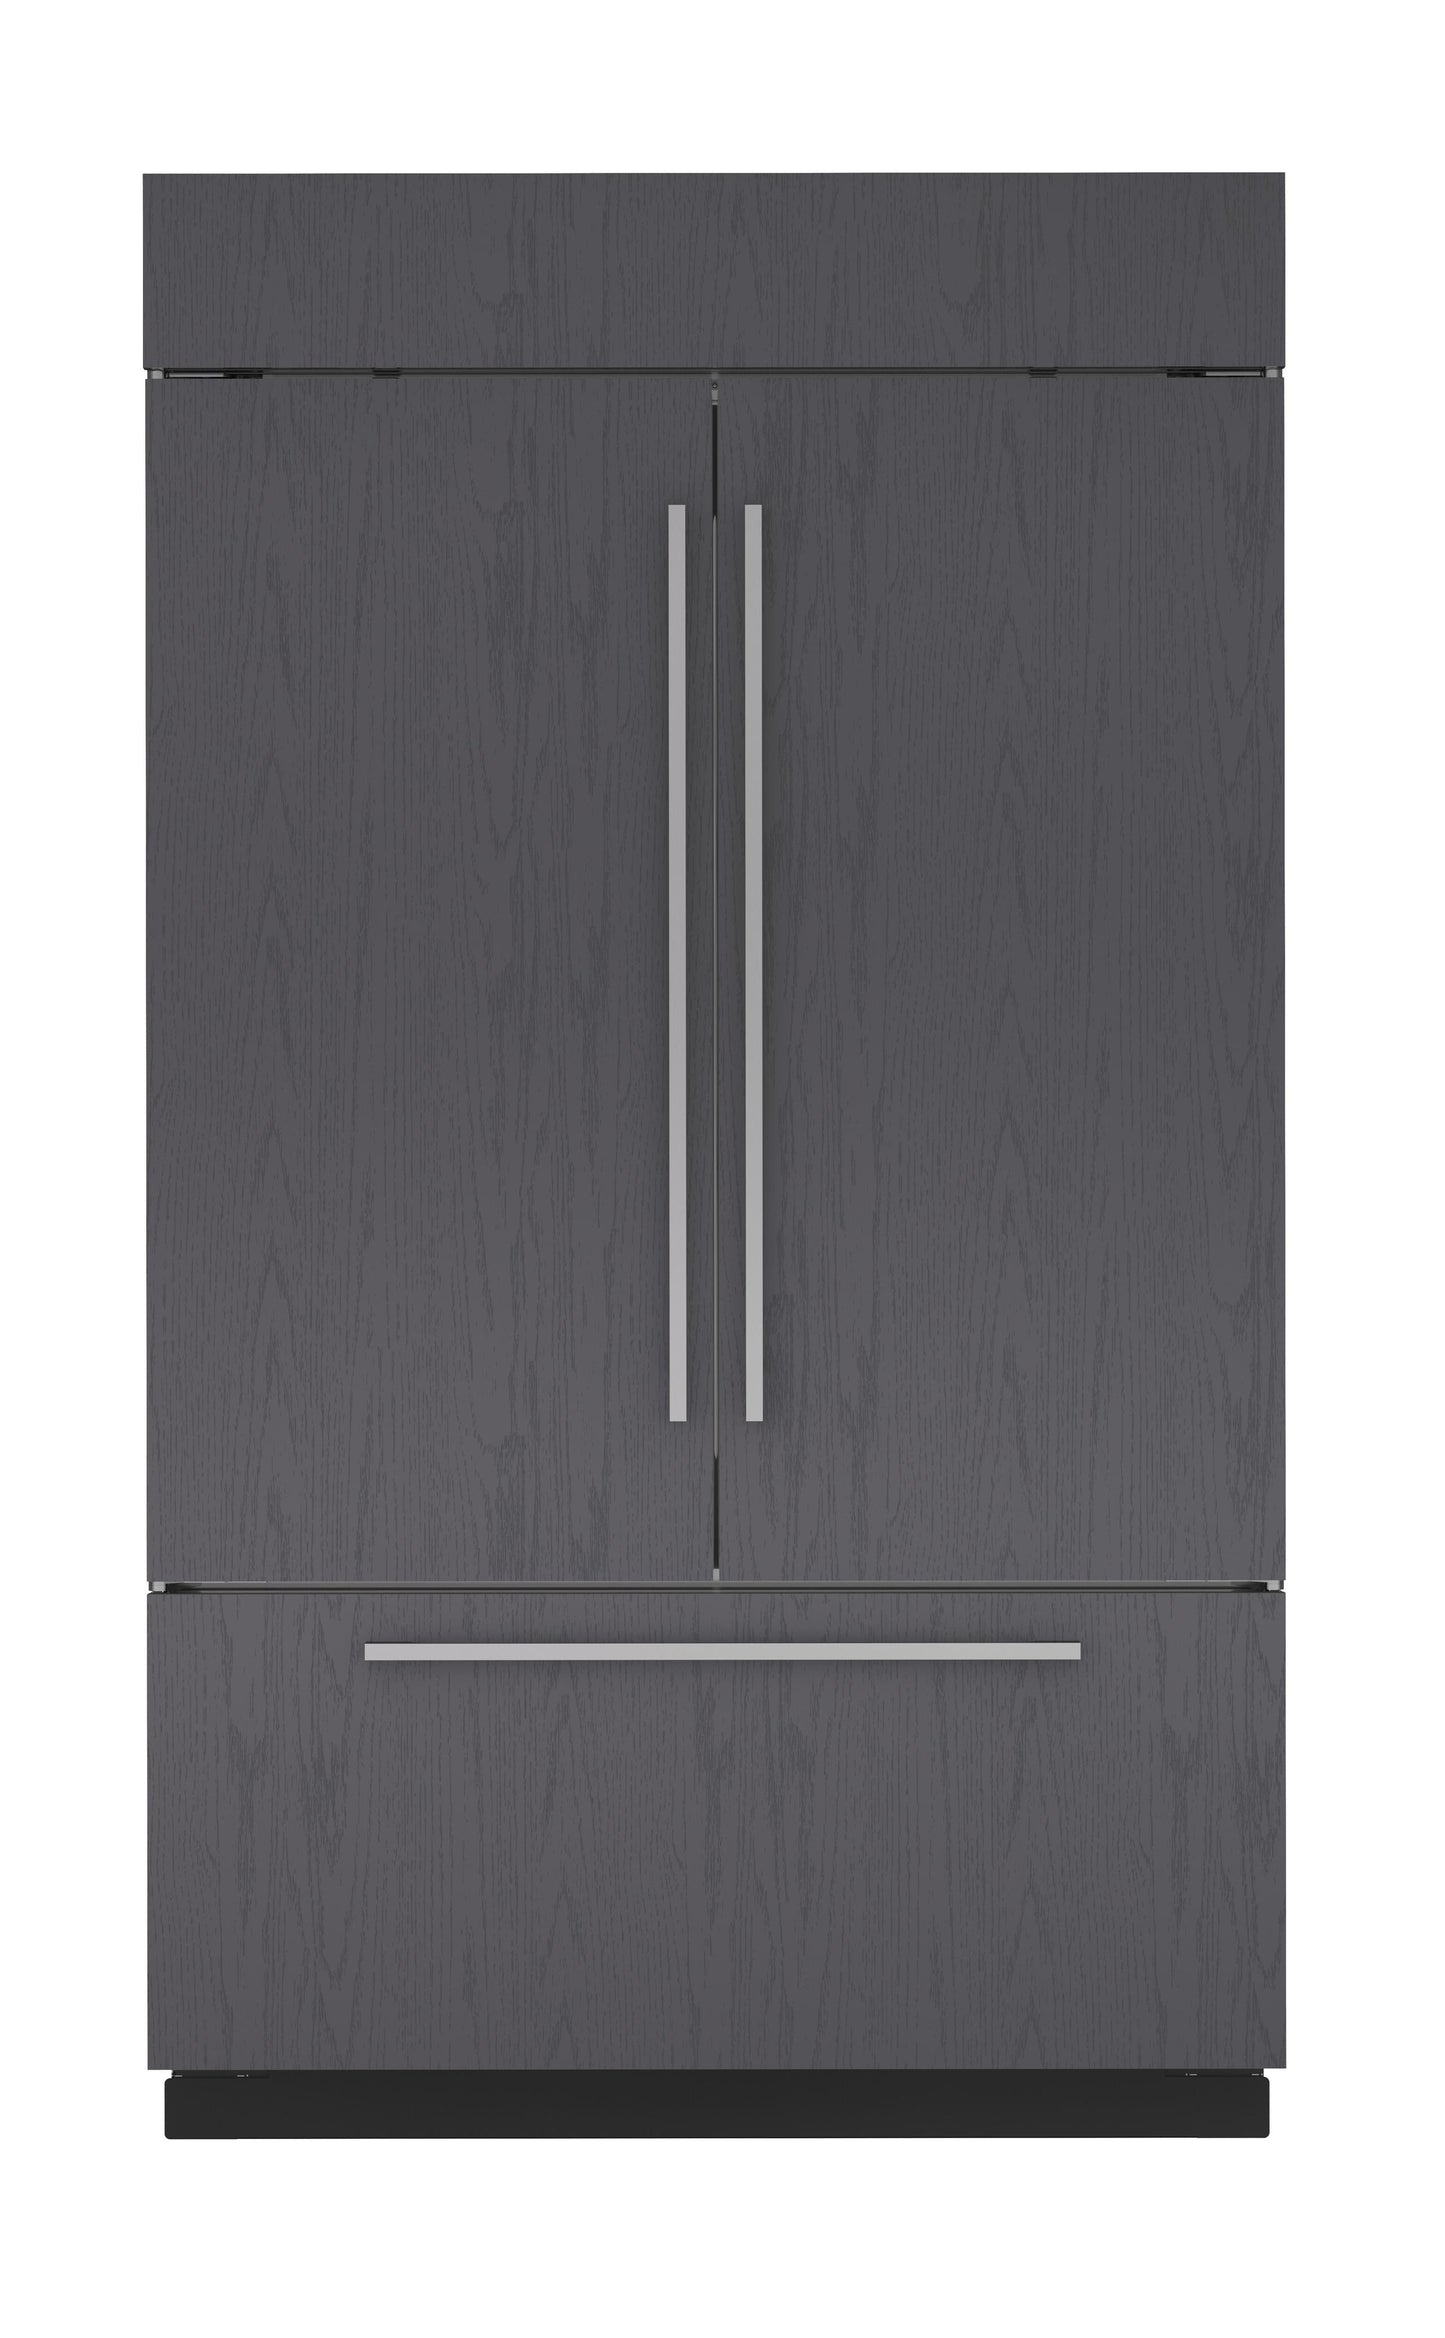 Sub-Zero CL4850UFDO 48" Classic French Door Refrigerator/Freezer - Panel Ready